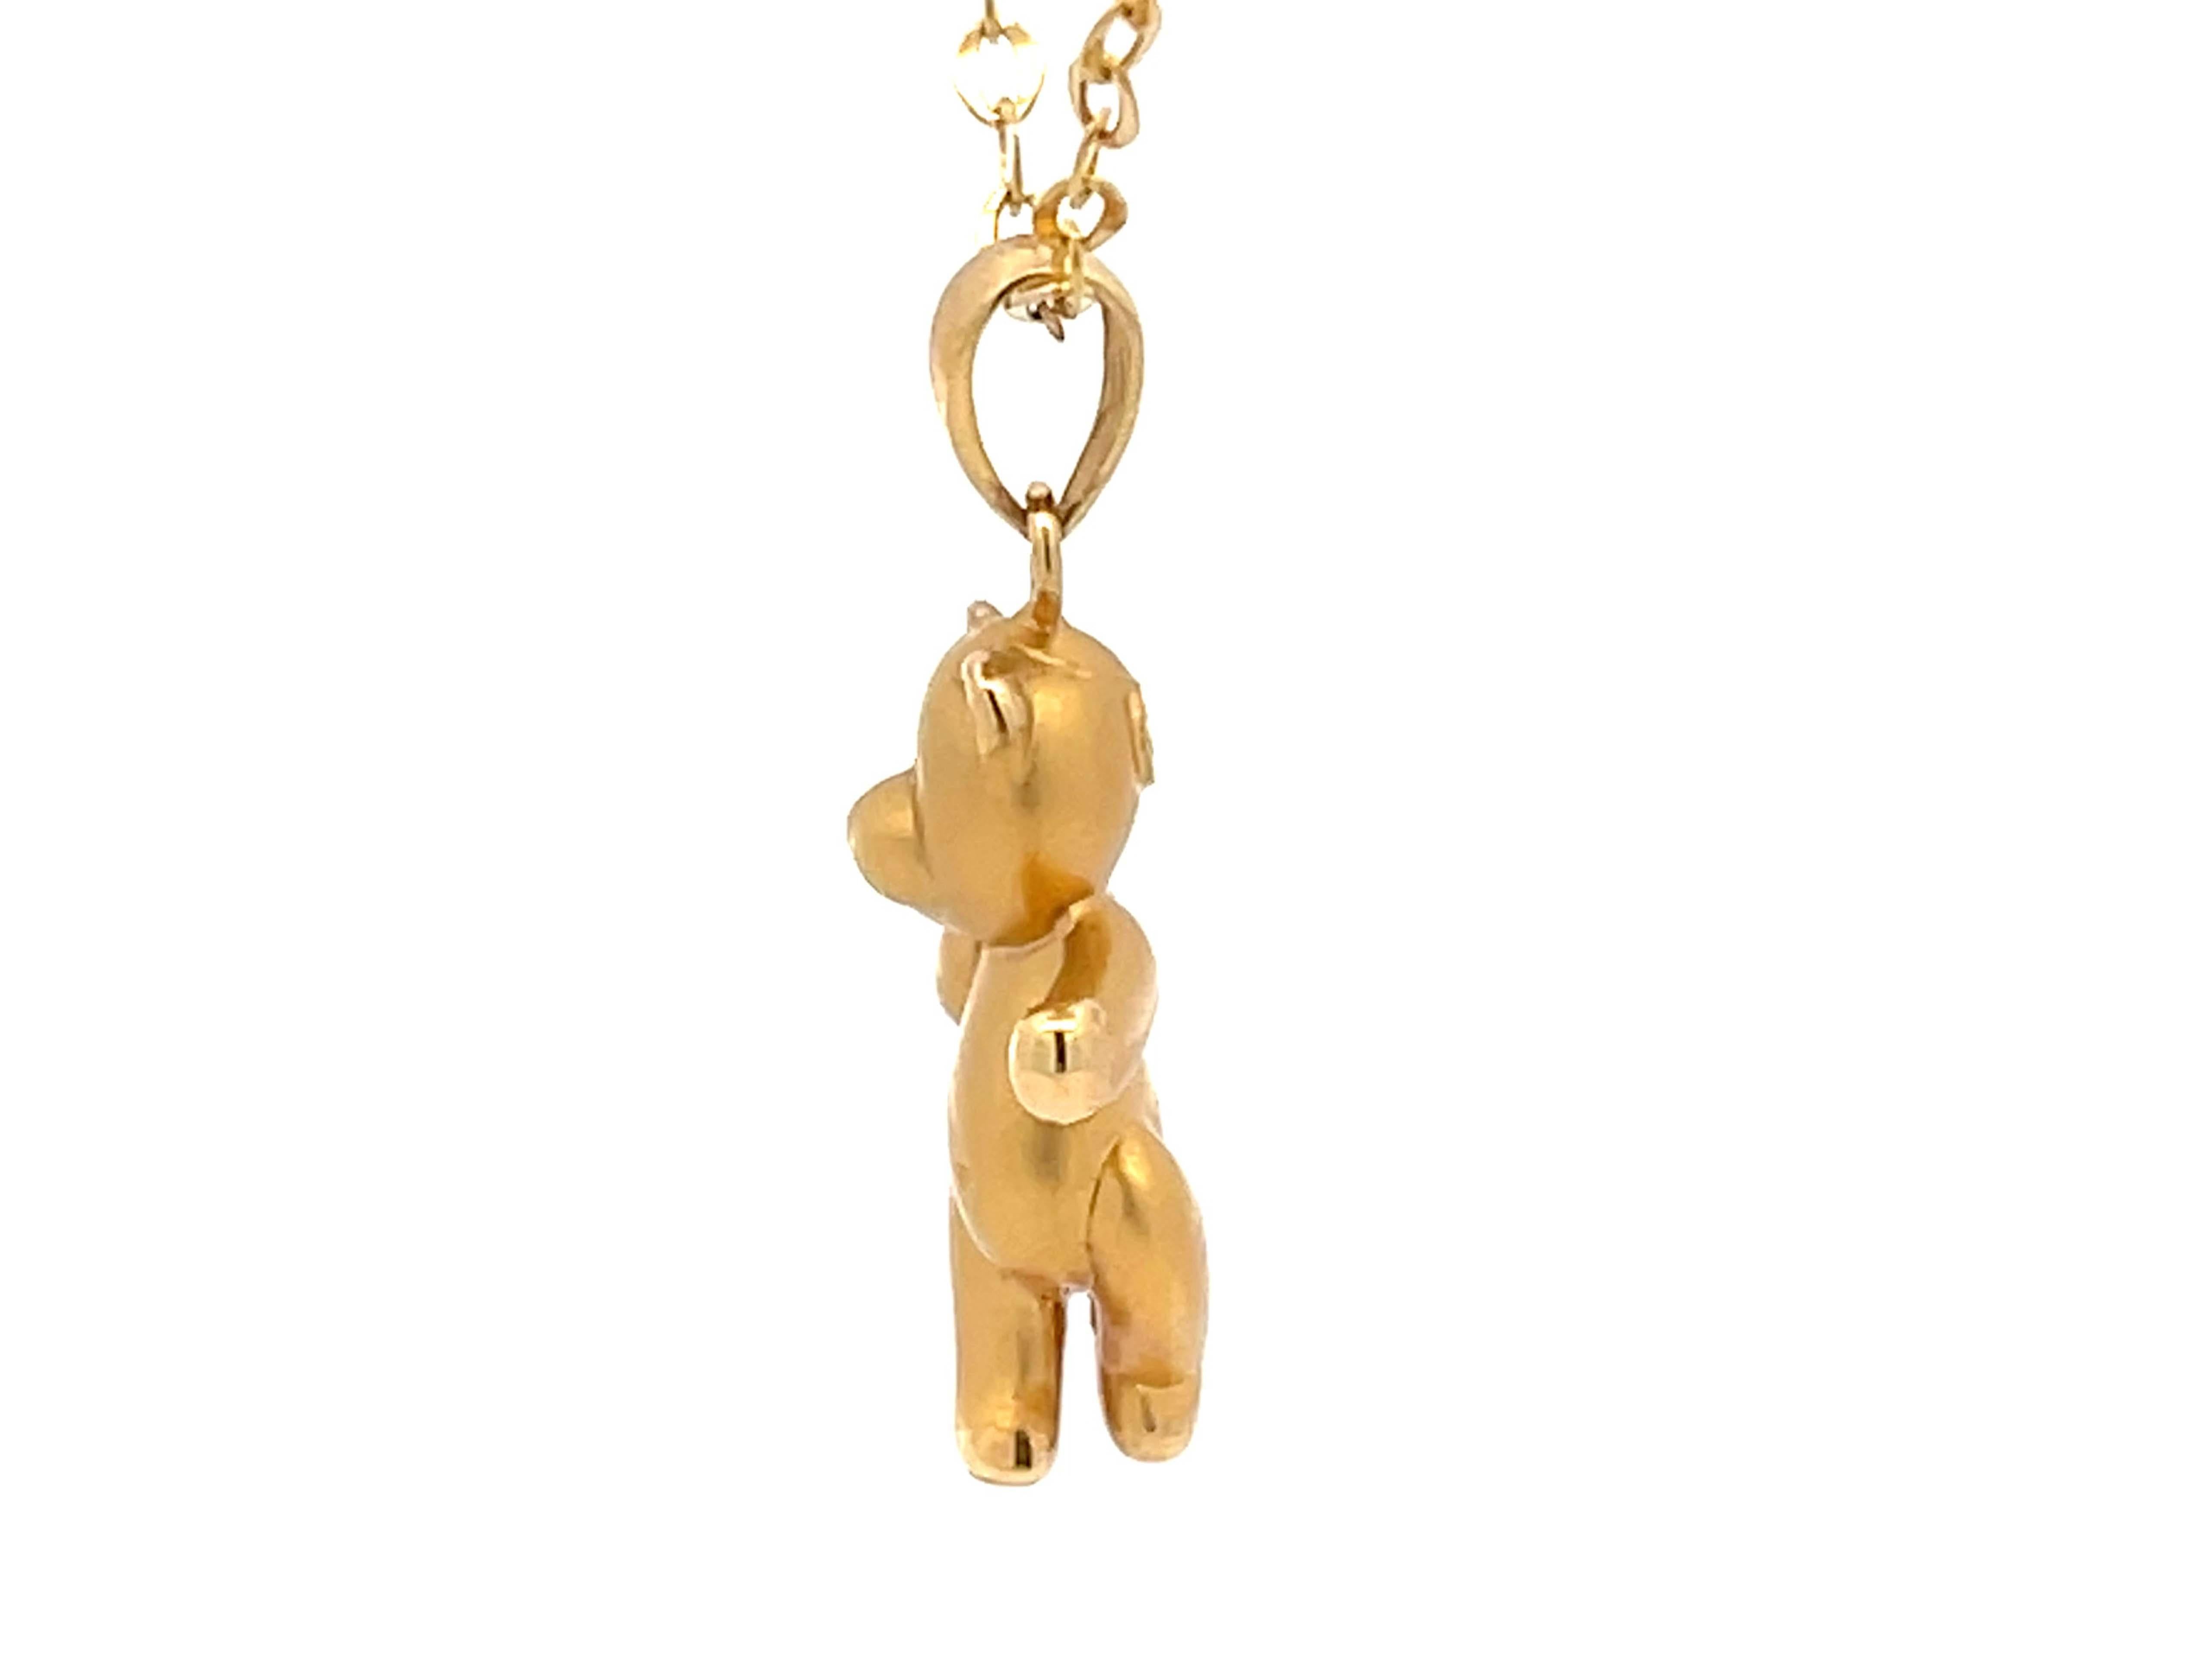 18k gold teddy bear pendant